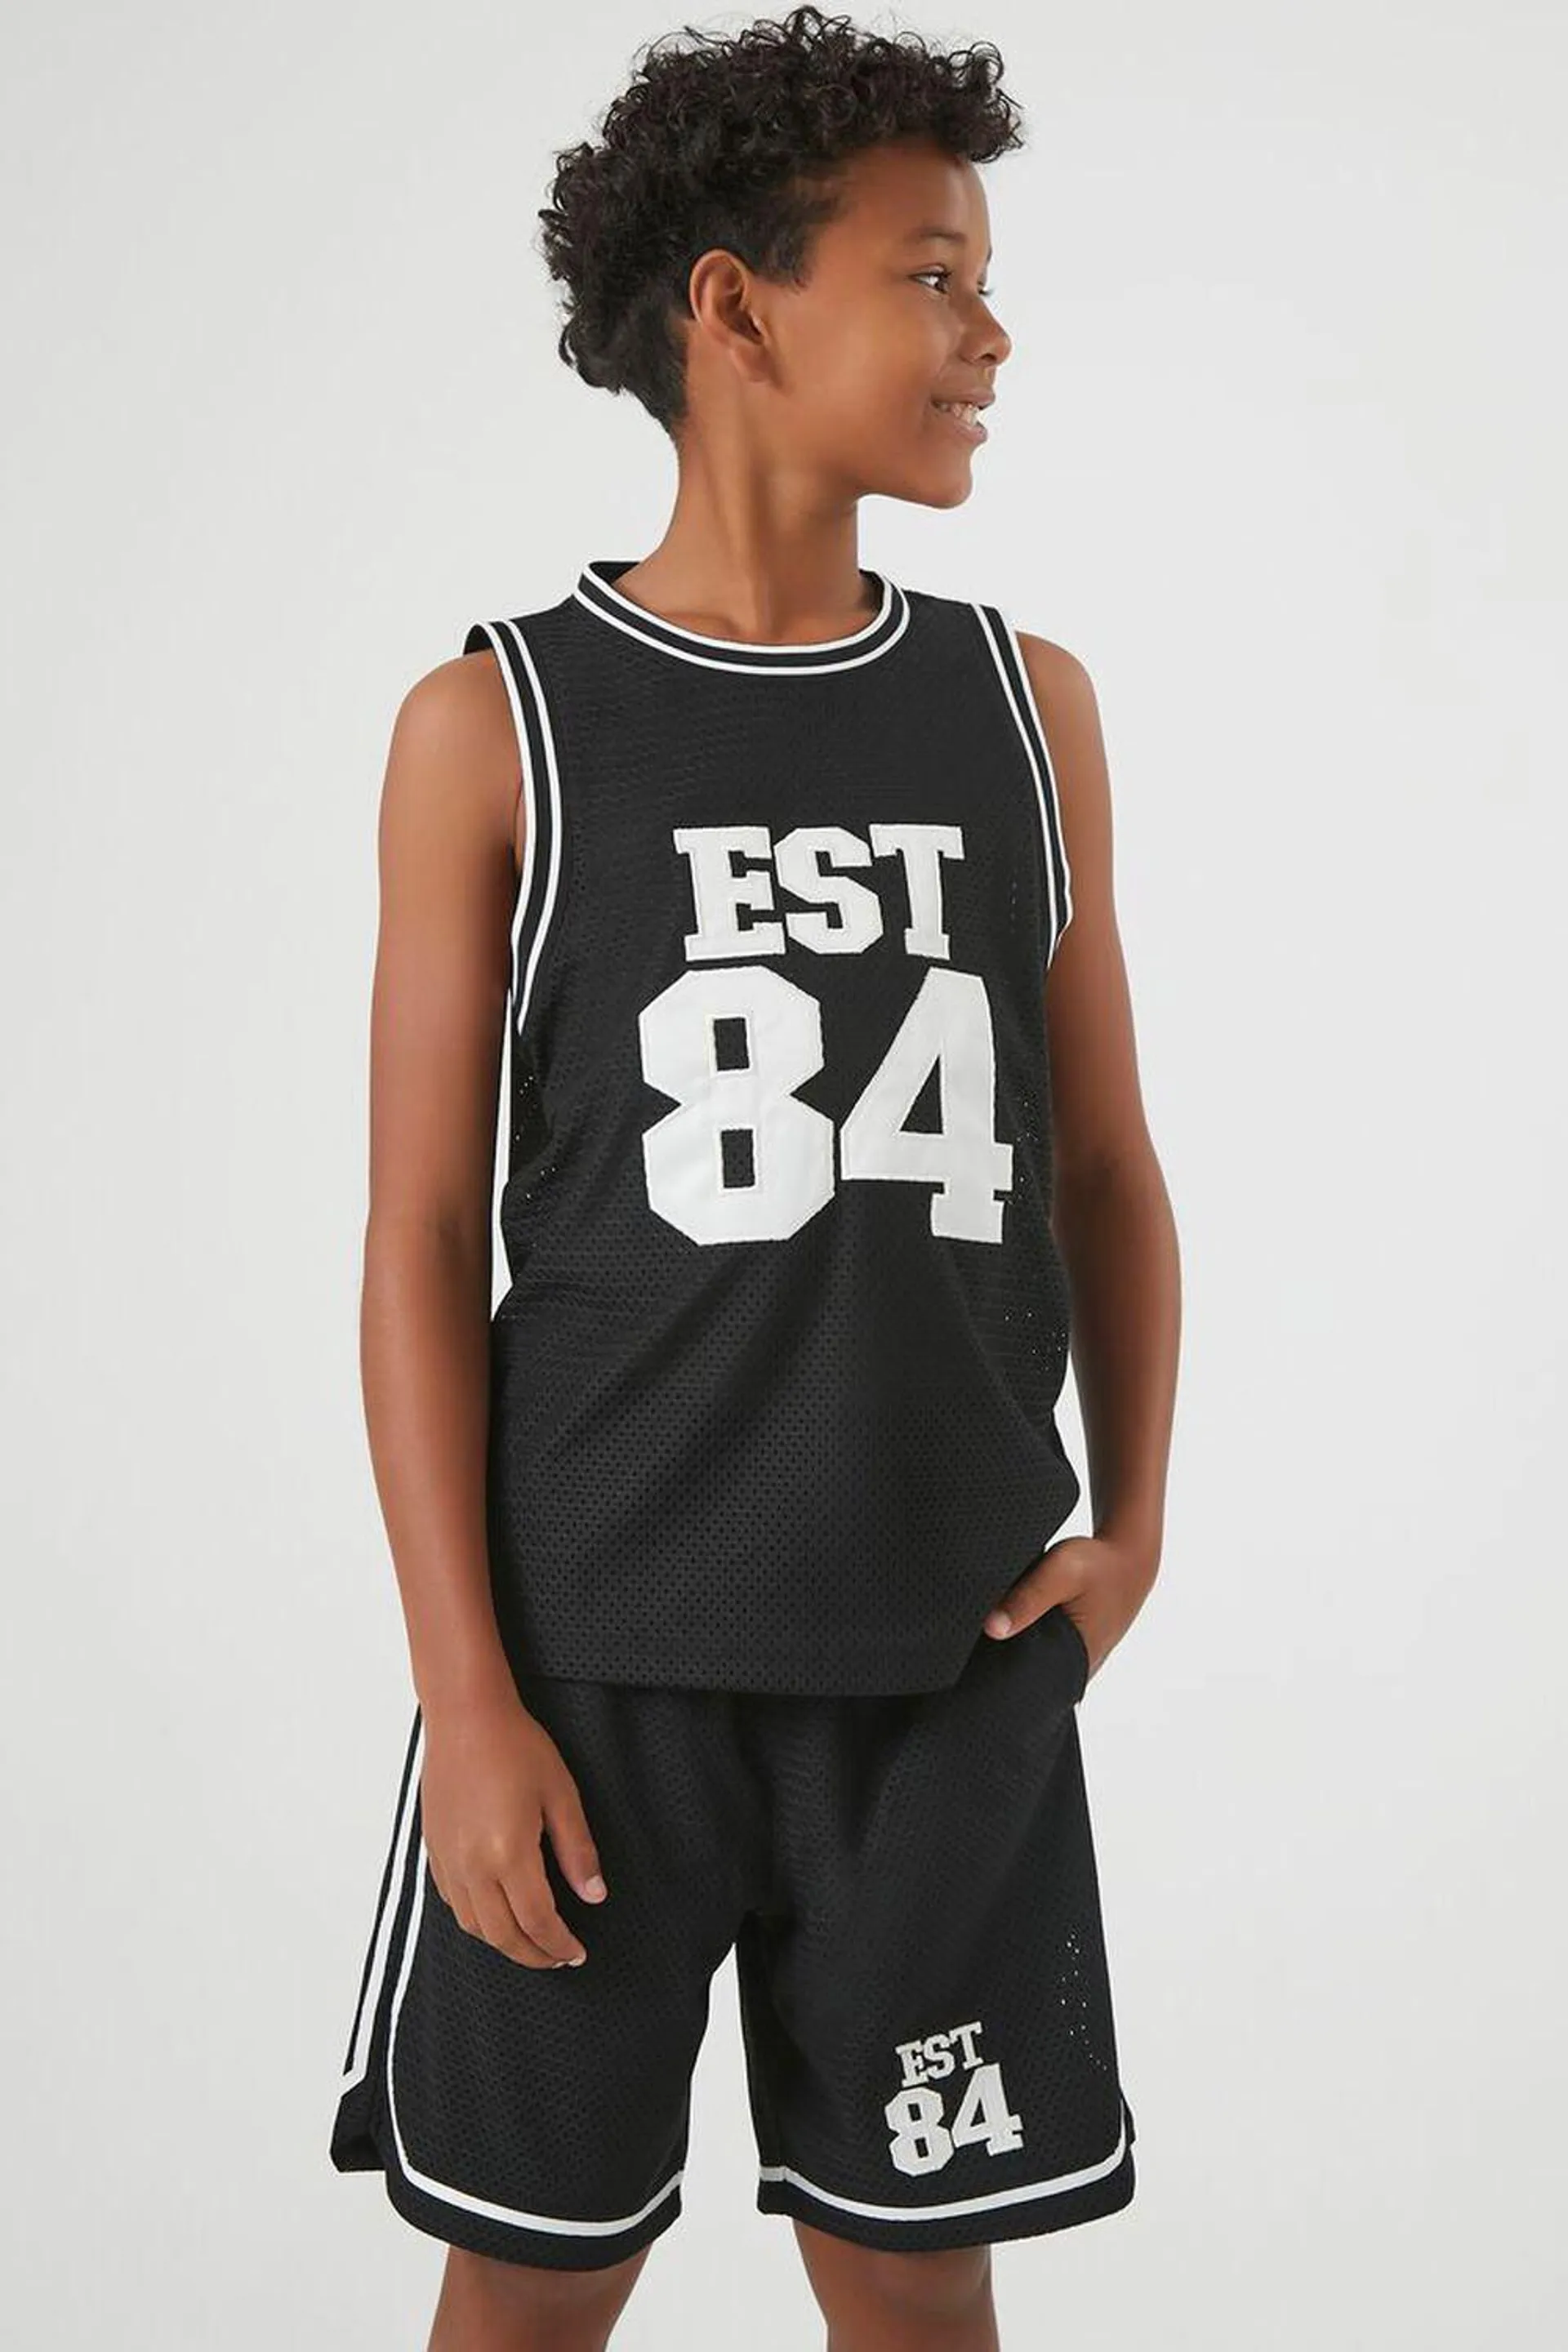 Kids EST84 Basketball Outfit (Girls + Boys)